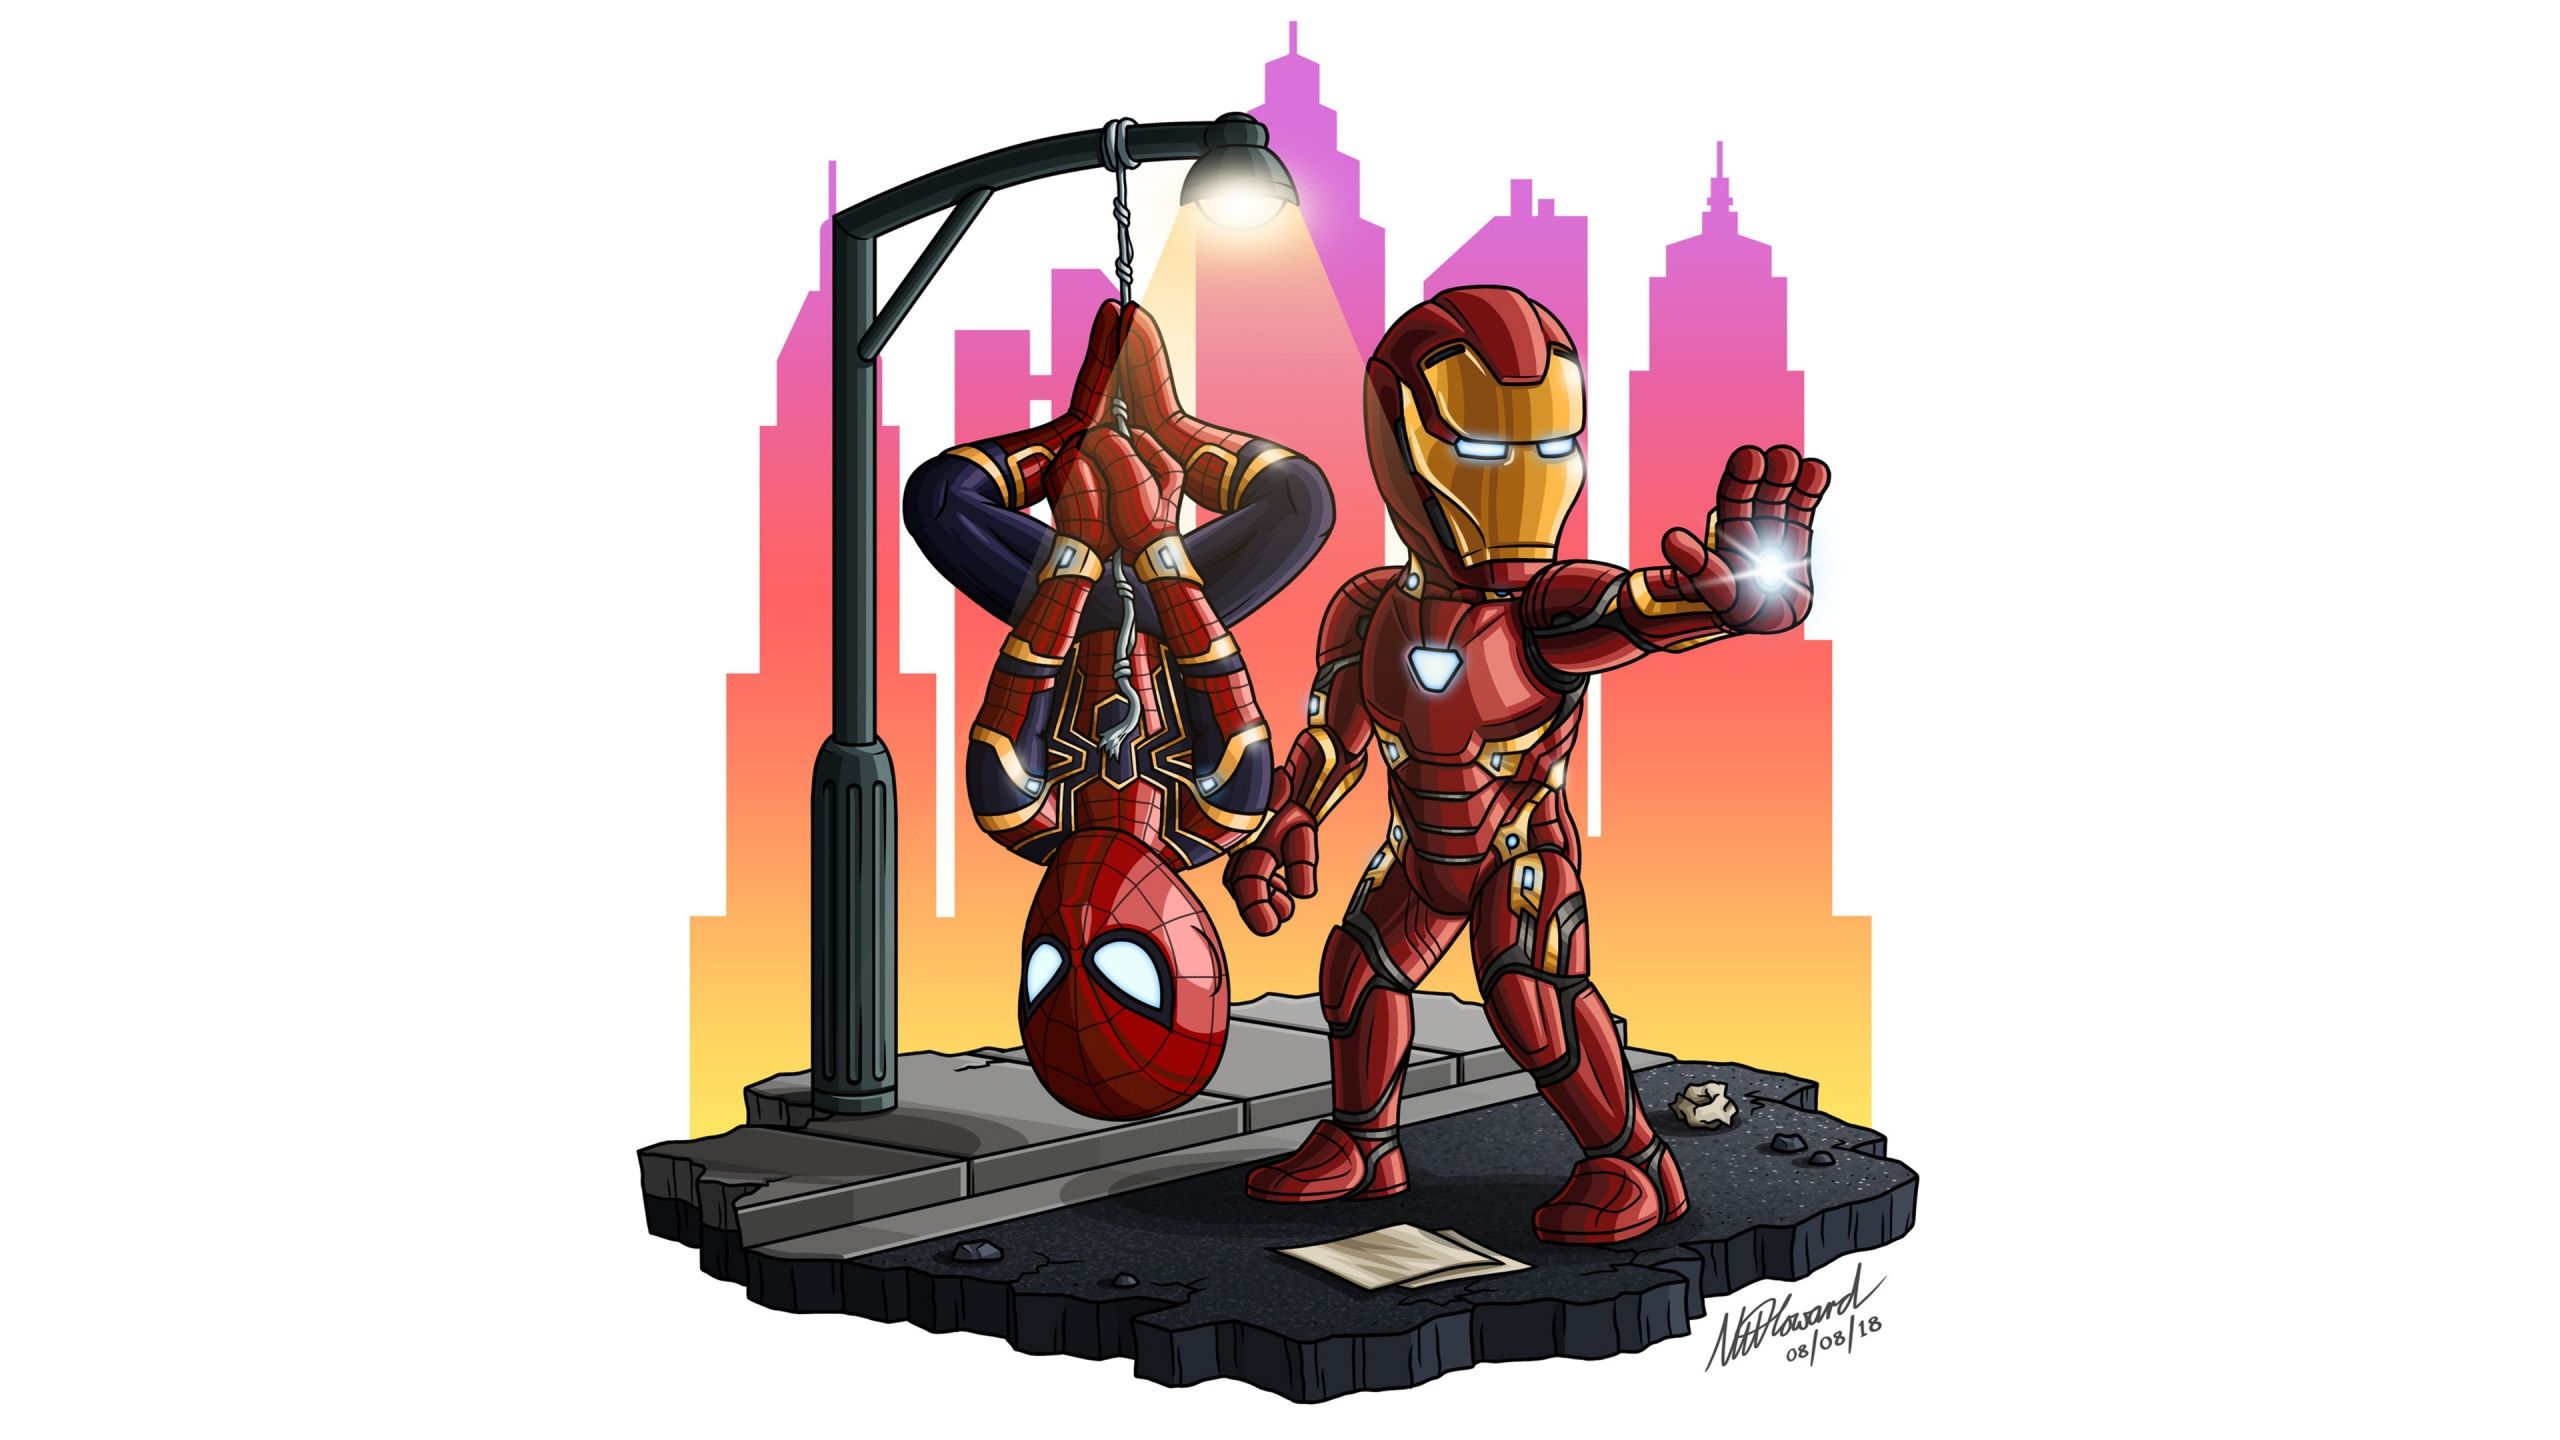 Wallpaper 4k Iron Man And Spiderman Chibipixel4k.com